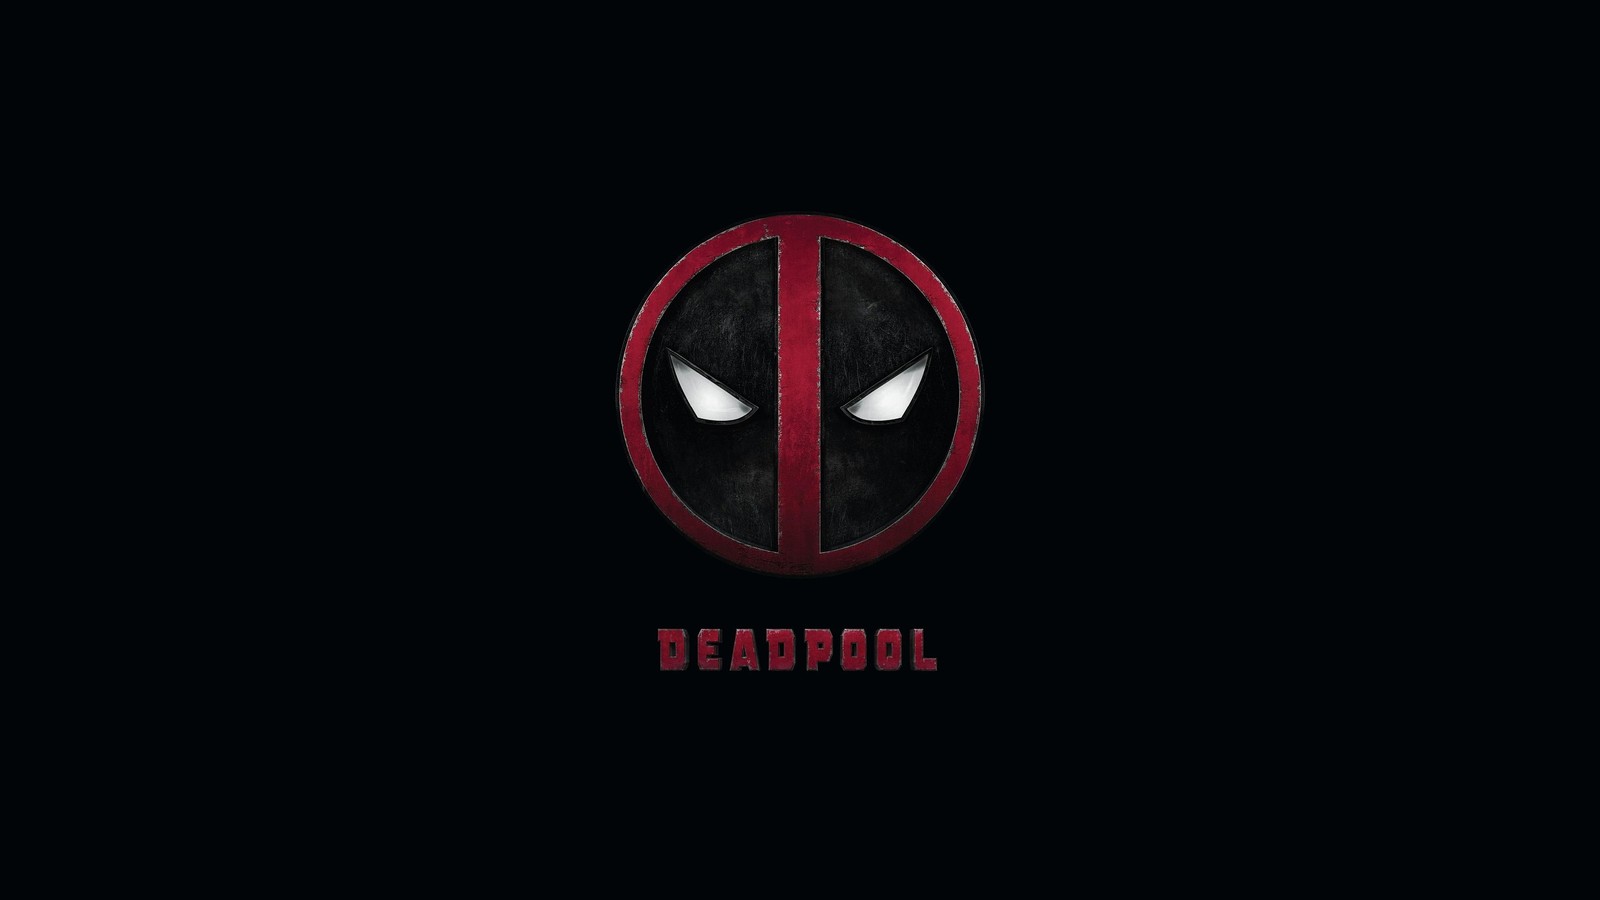 Deadpool logo 4k movie wallpaper 3840x2160